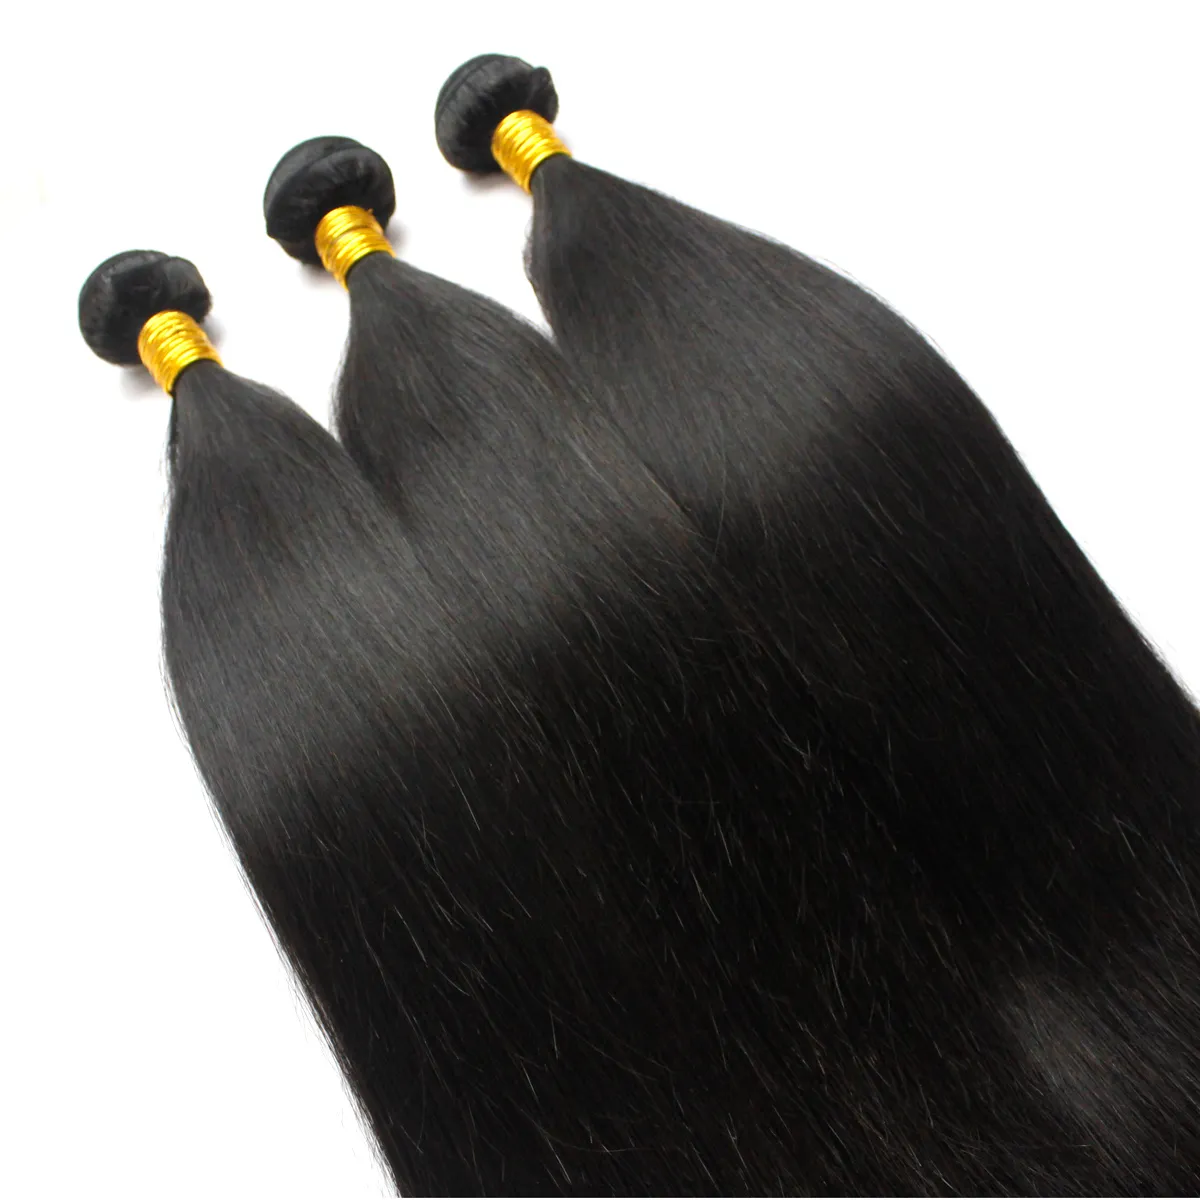 10BundlesFactory Wholesale Soft Brazilian Straight Hair Weaves 100 Human Remy Hair Extension 1B Natural Black Full Peruvian Virgin Hair